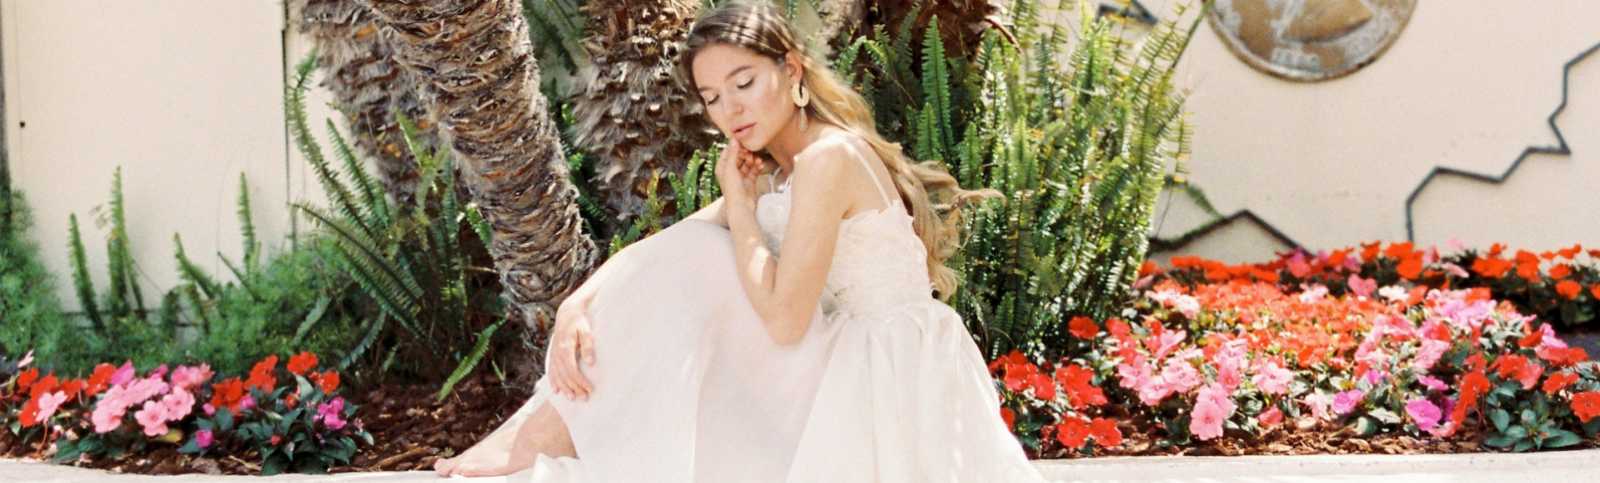 Aisle Style Extravaganza: 5 Fashion Ideas to Make Your Wedding